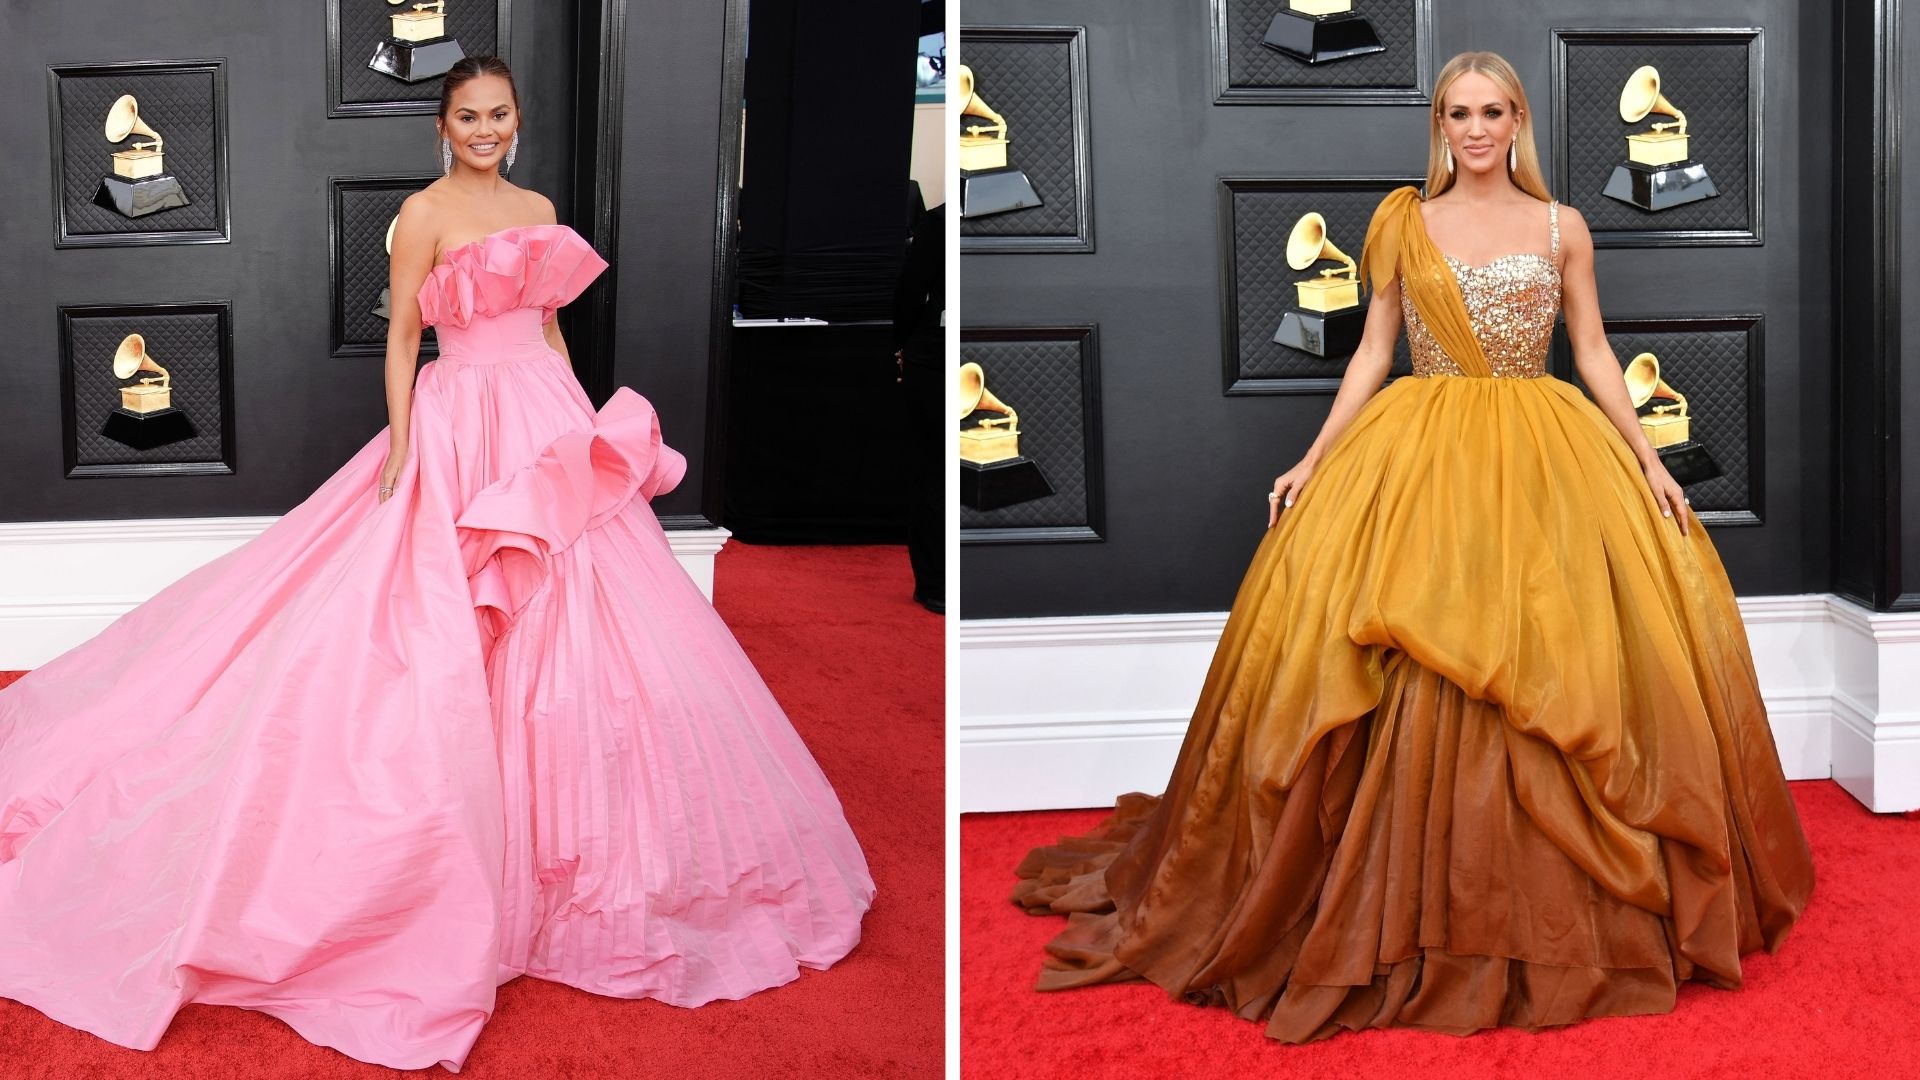 Grammys 2022 Red Carpet: 8 LGBTQ+ Stars Who Slayed the Grammys Red Carpet